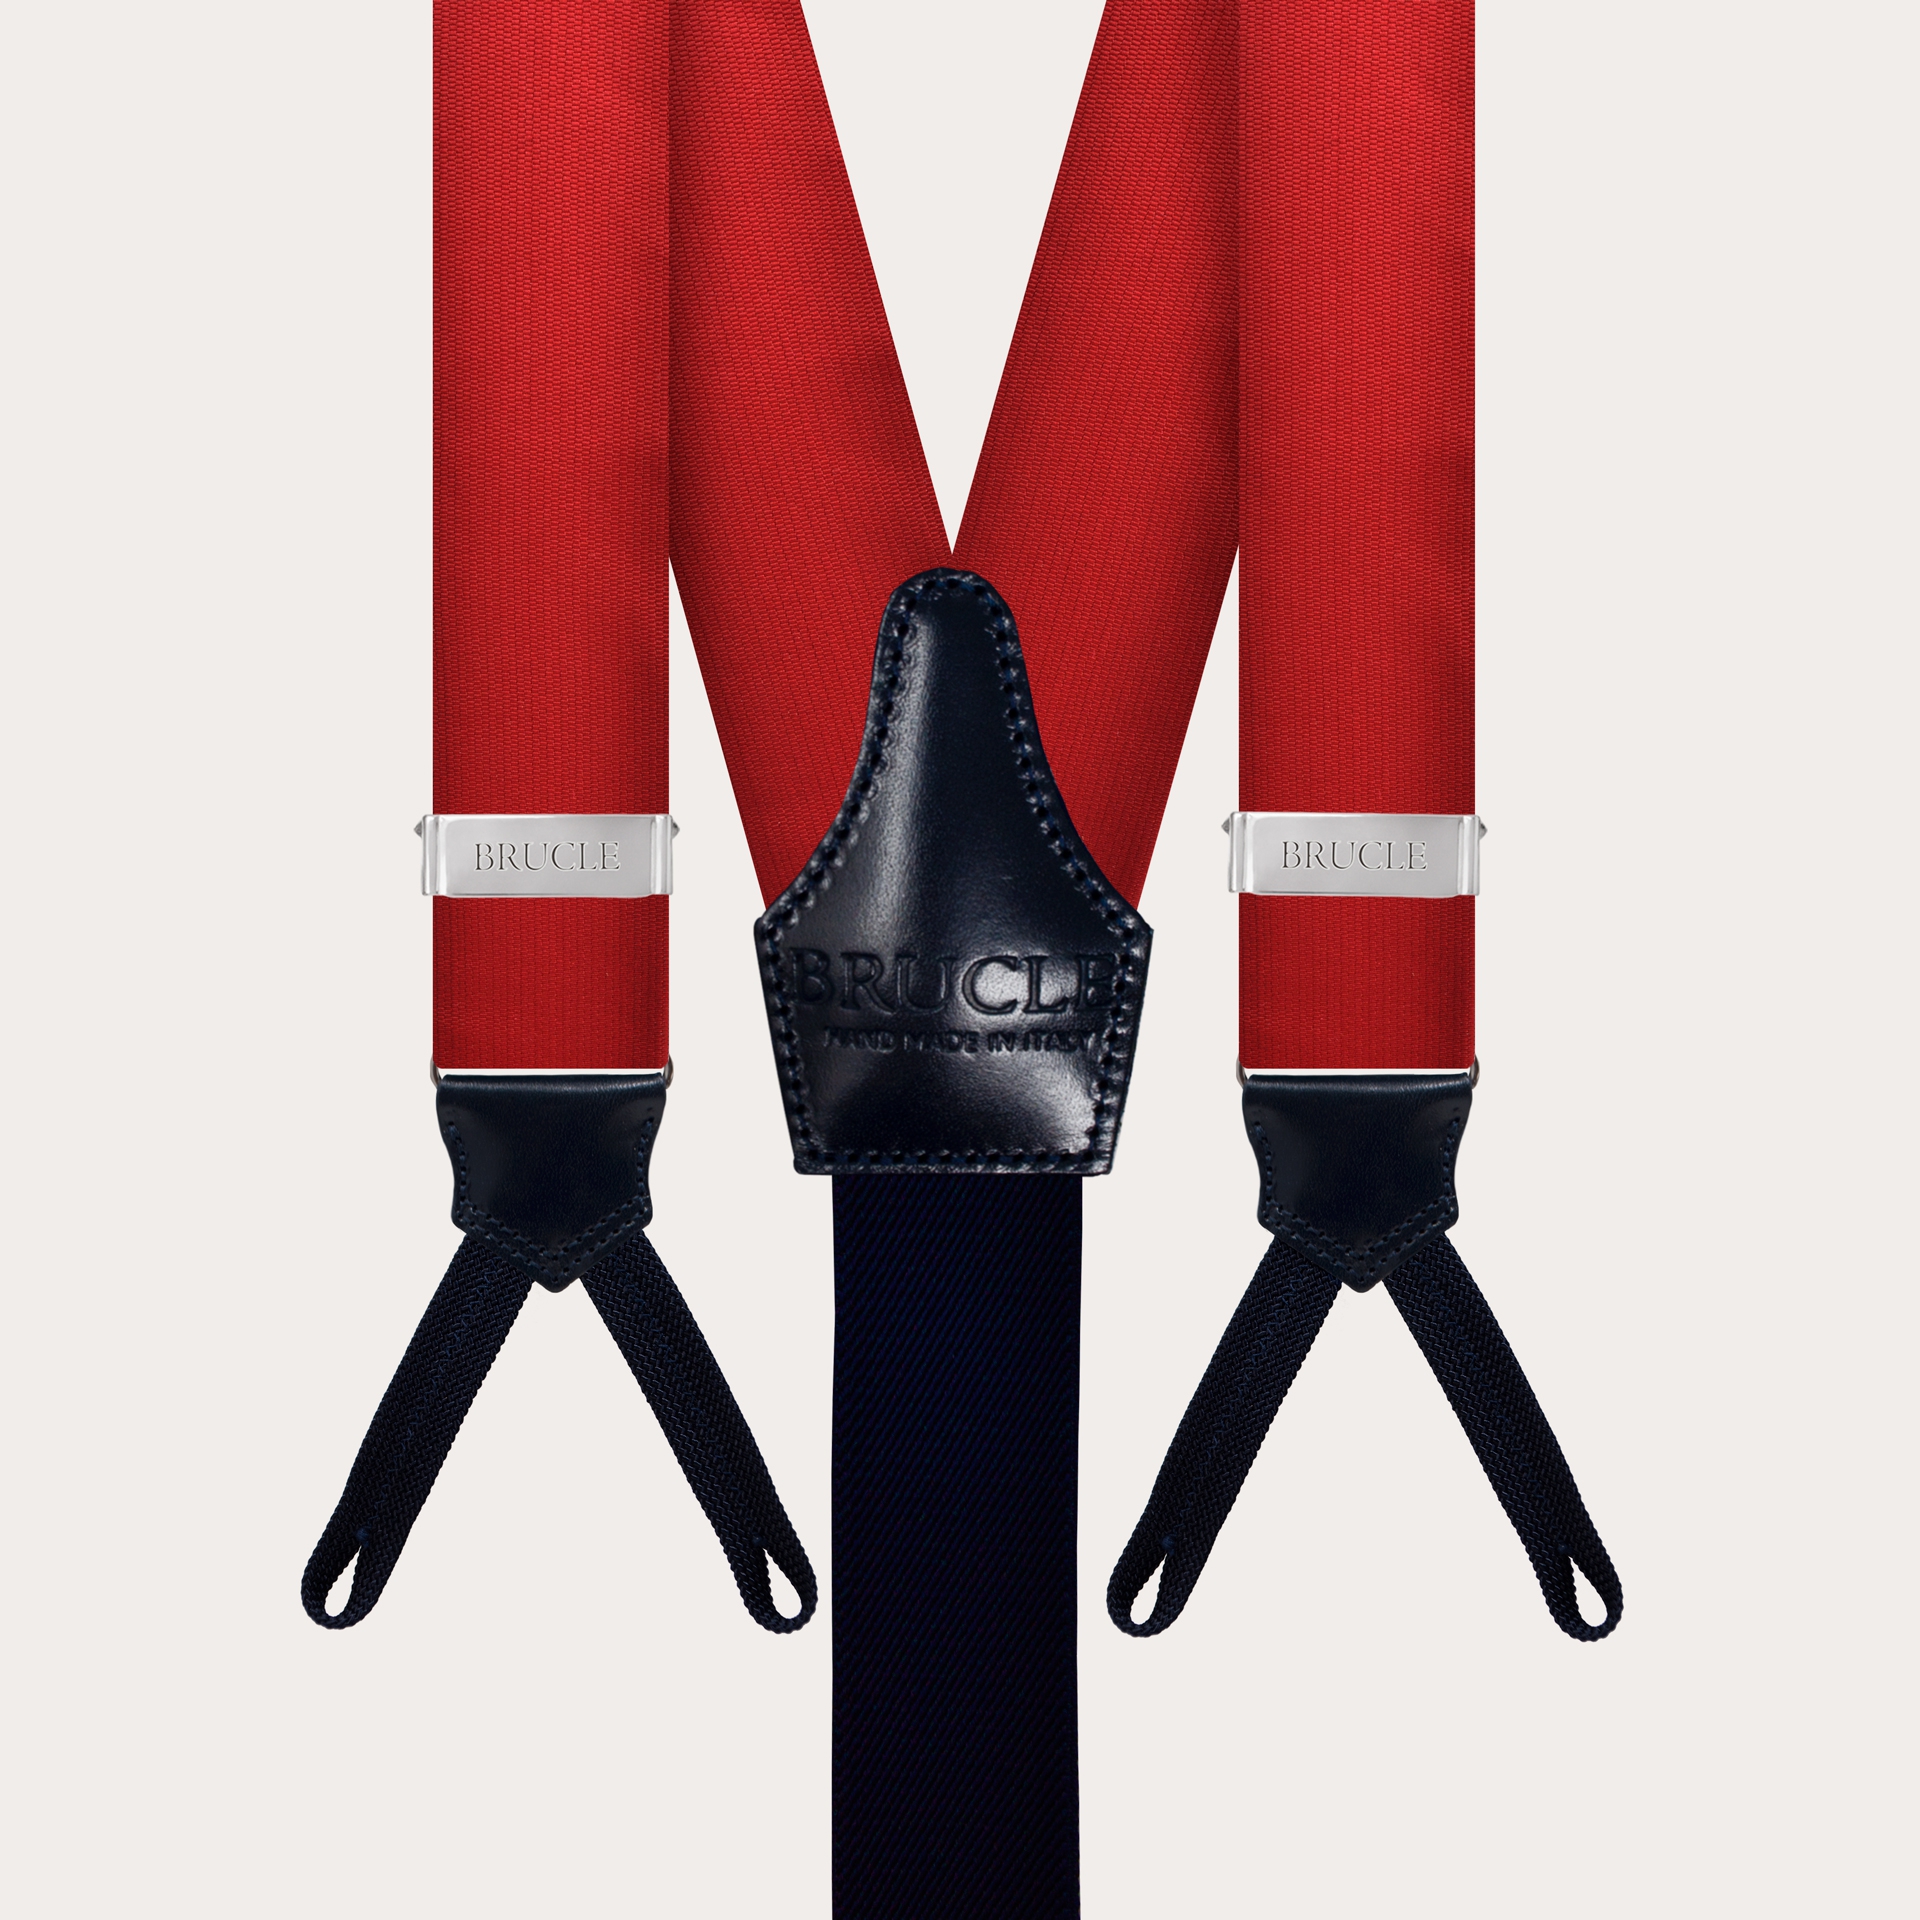 Formal Y-shape suspenders with braid runners, red